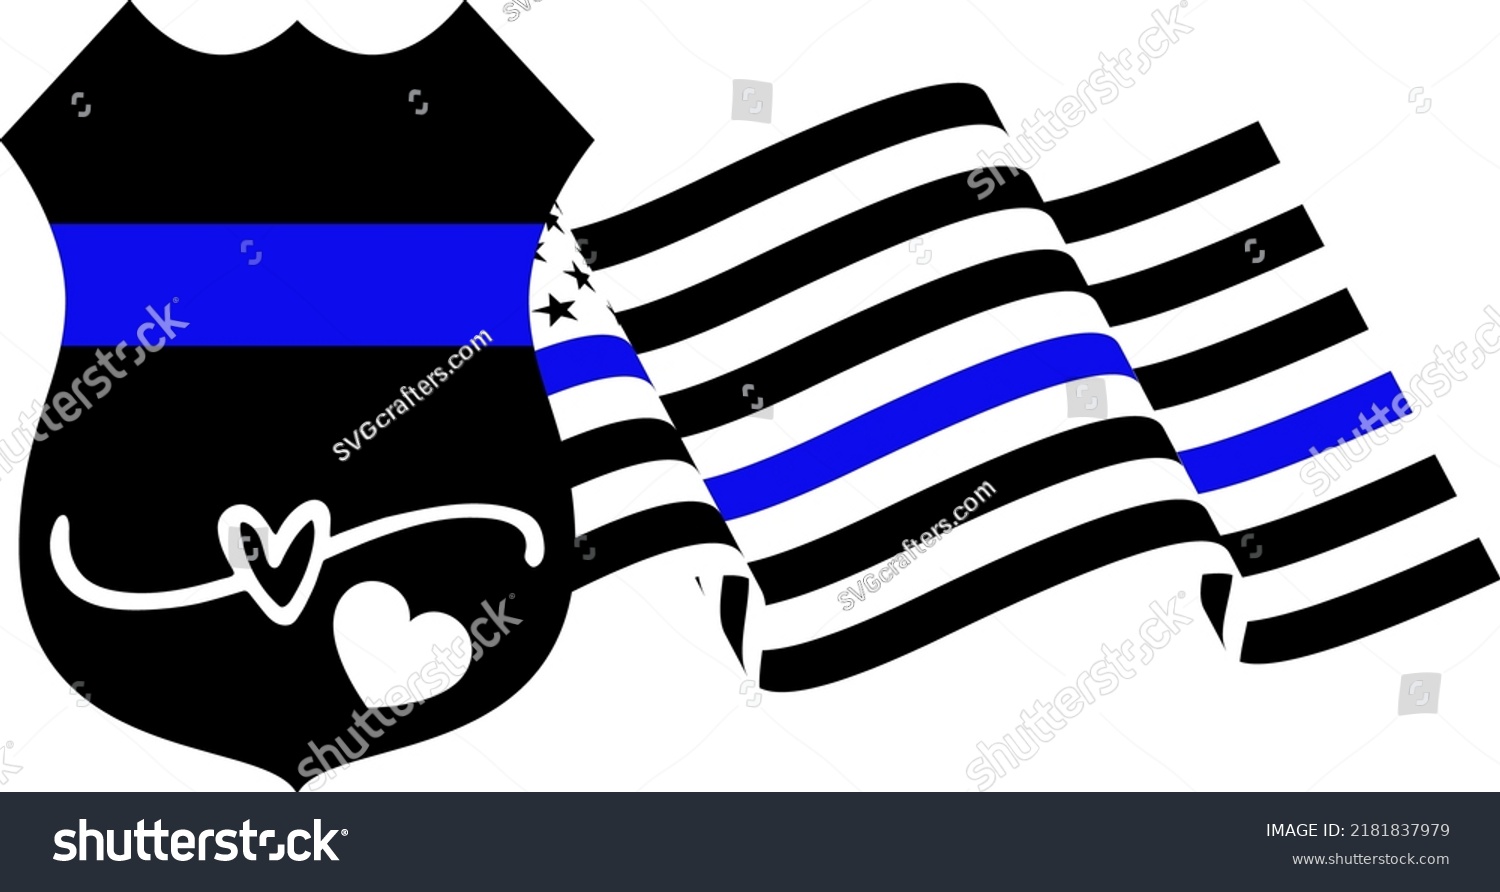 SVG of Police Badge with Waving Flag Vector, Thin Blue Line Flag illustration svg